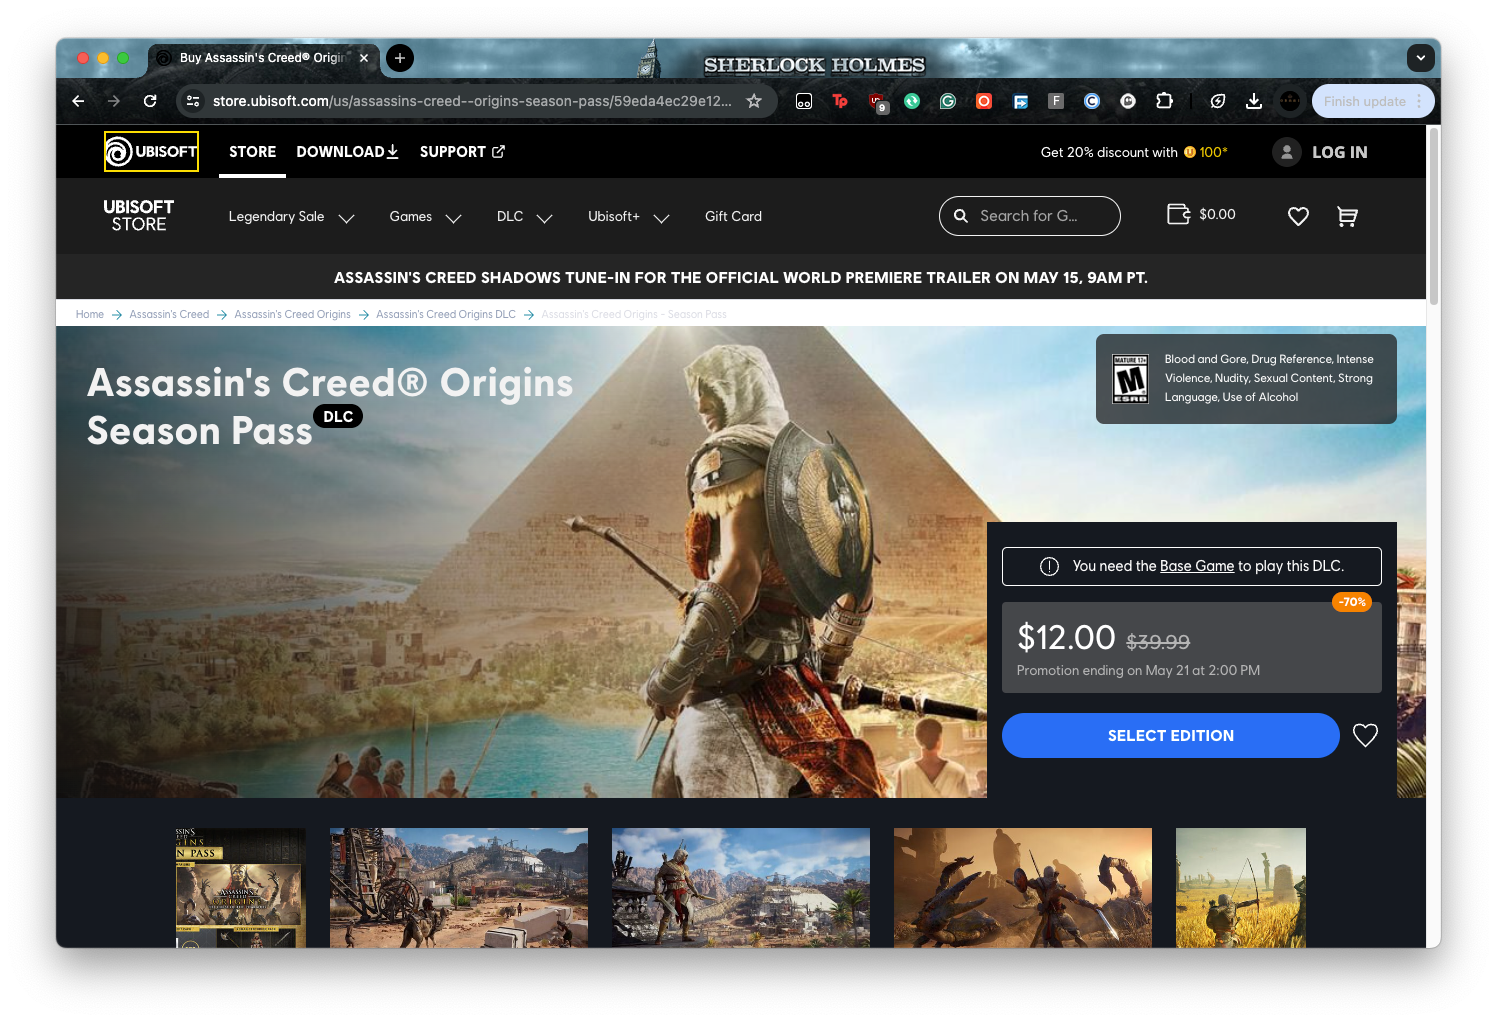 Assassin's Creed Origins Season Pass for sale on Ubisoft website